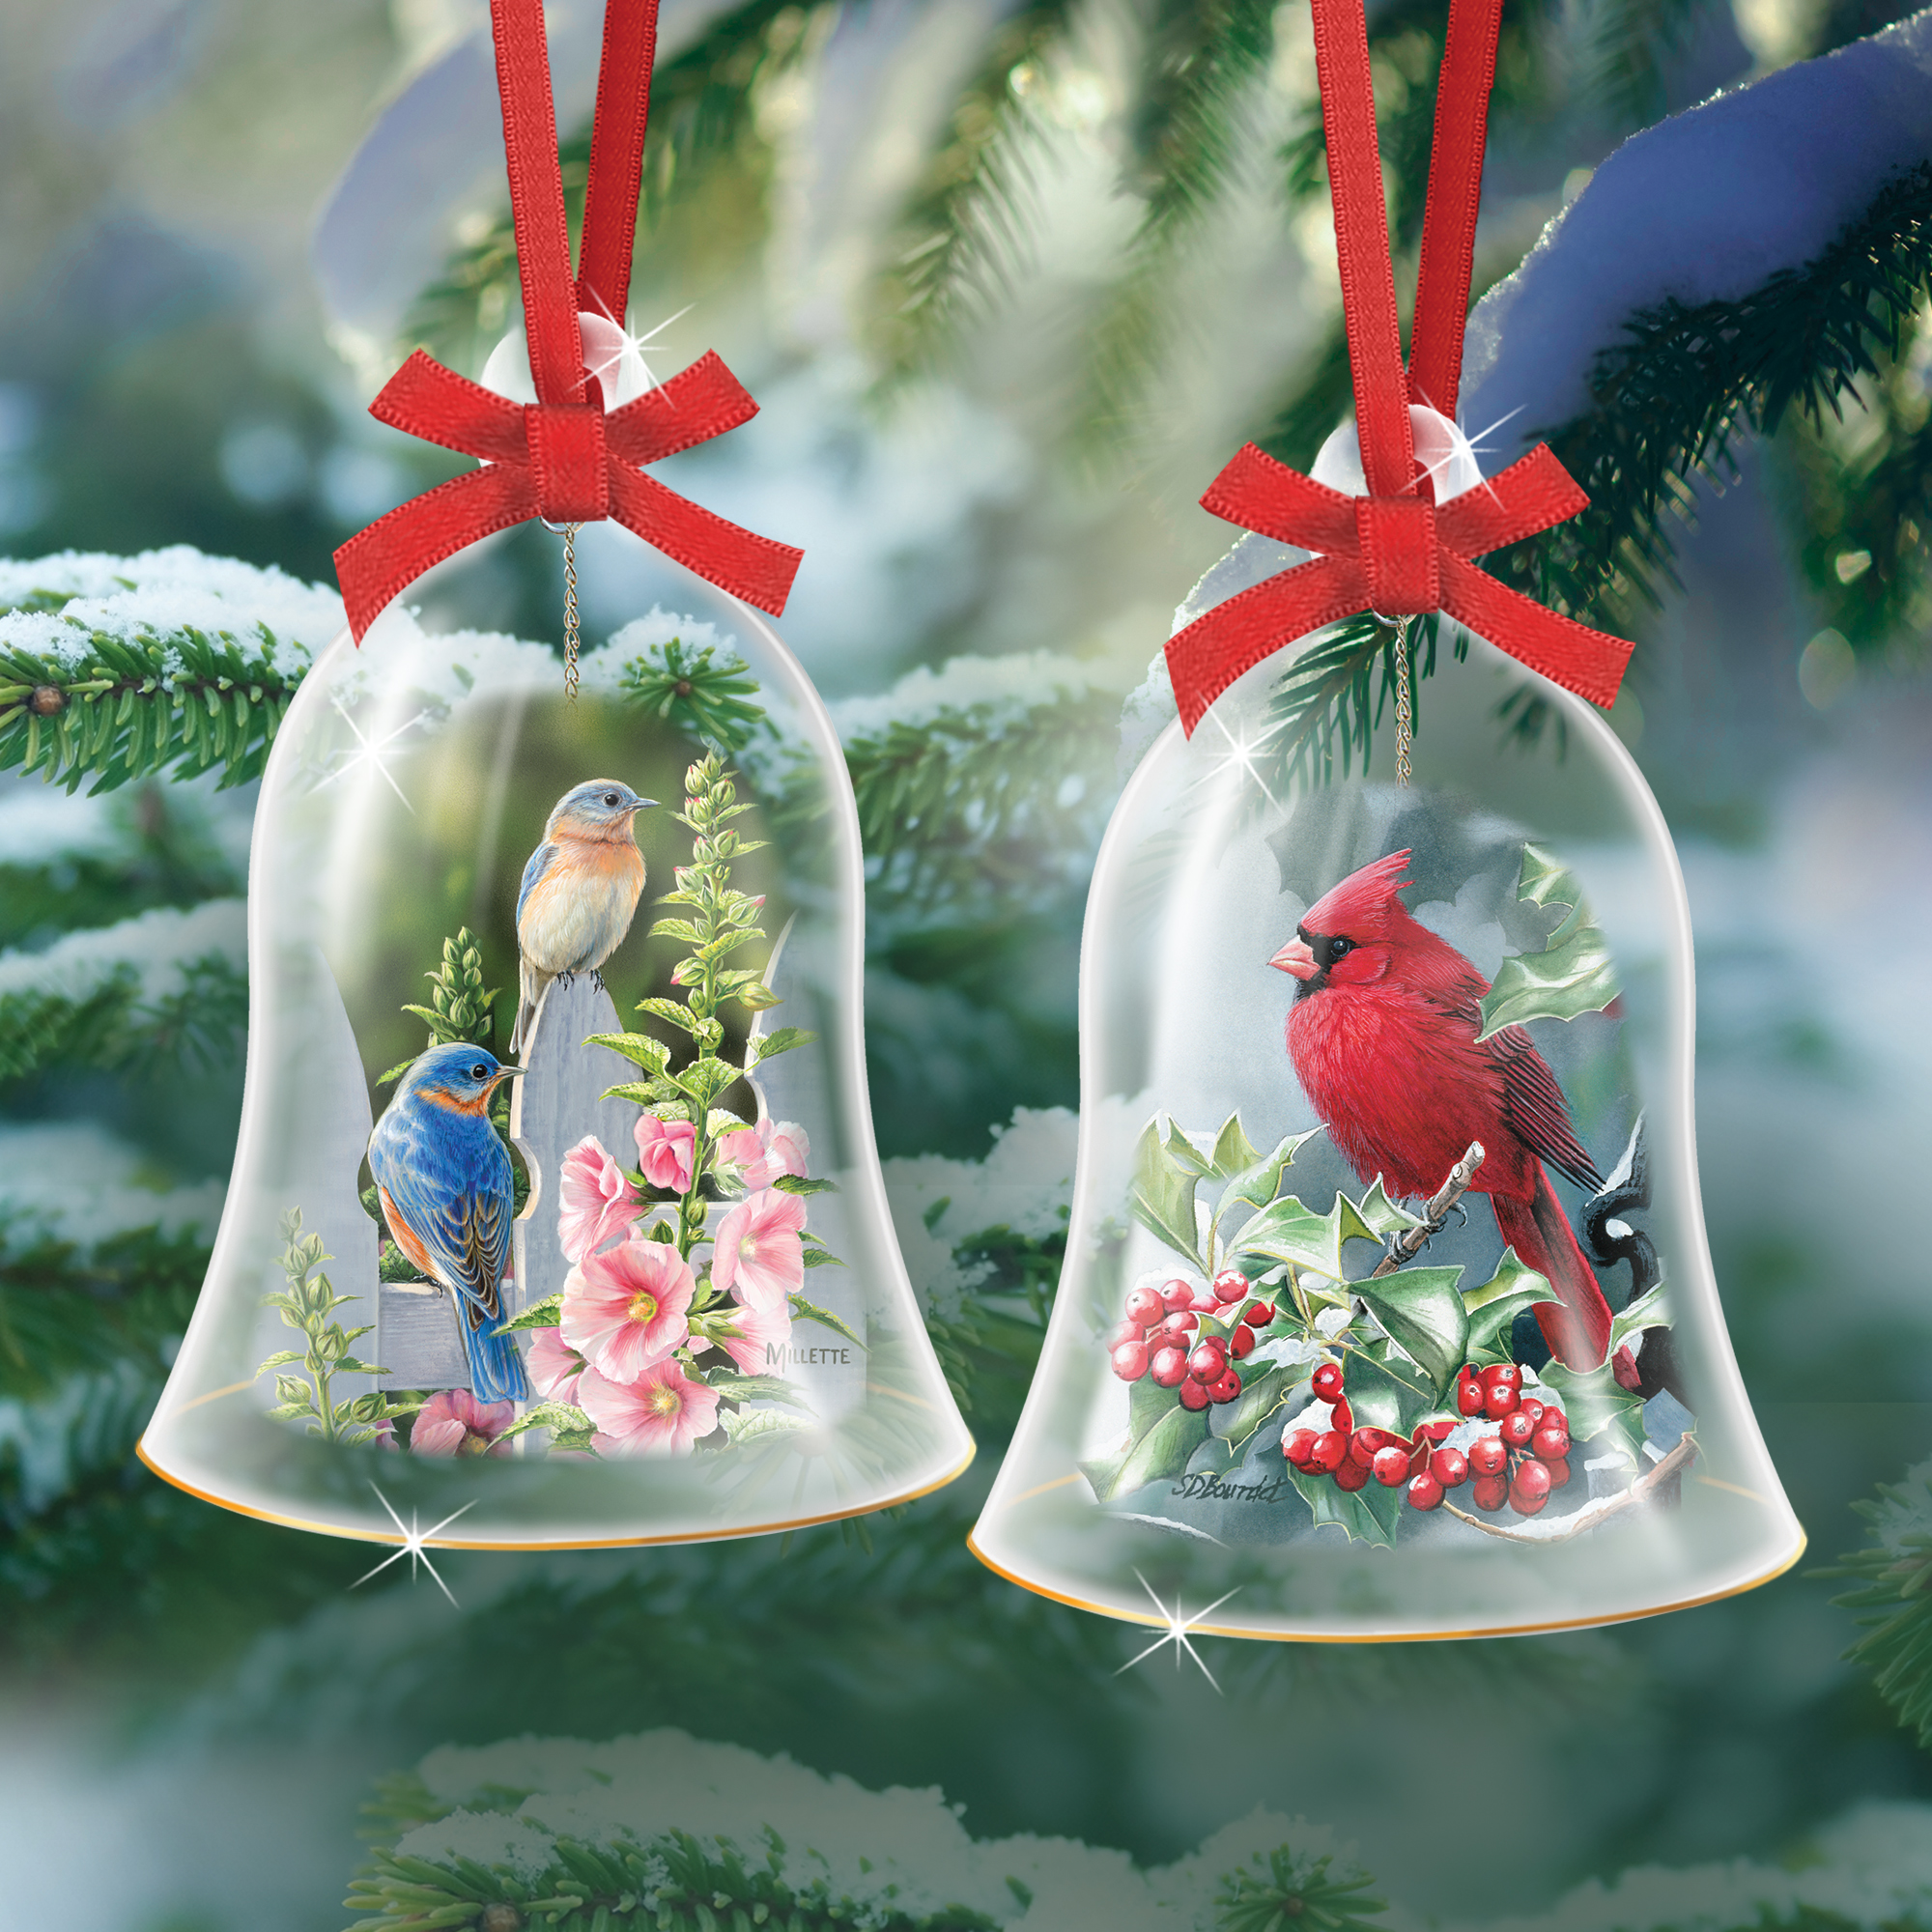 Songbird Christmas Bell Ornaments 10741 0011 a main